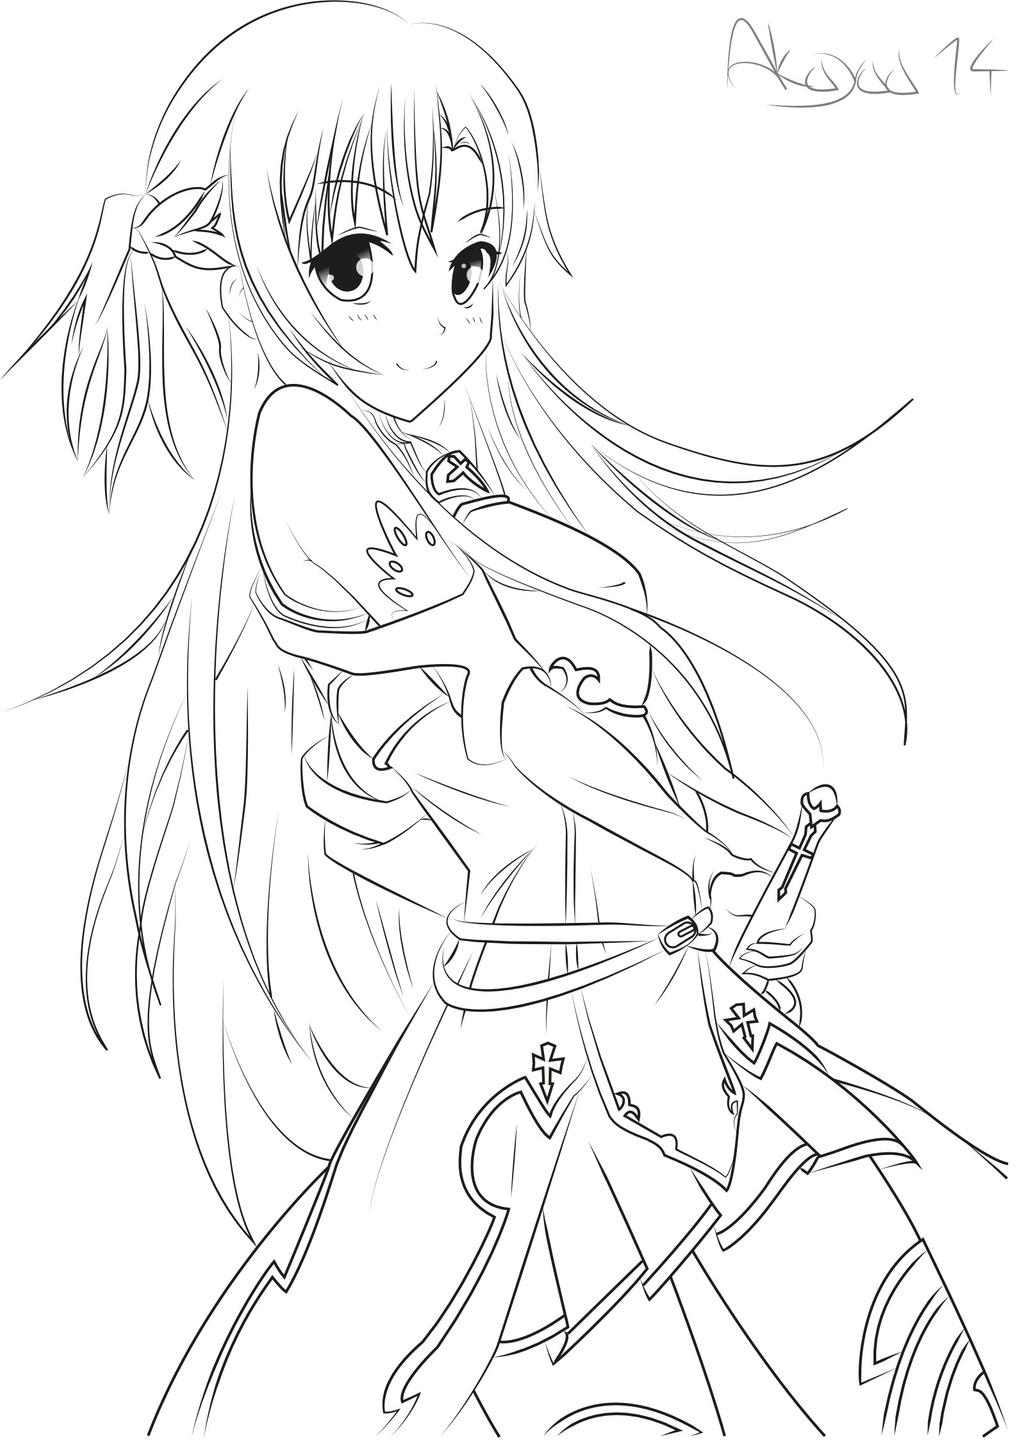 Asuna Yuuki / Sword Art Online [LineArt] by Akayaa on DeviantArt